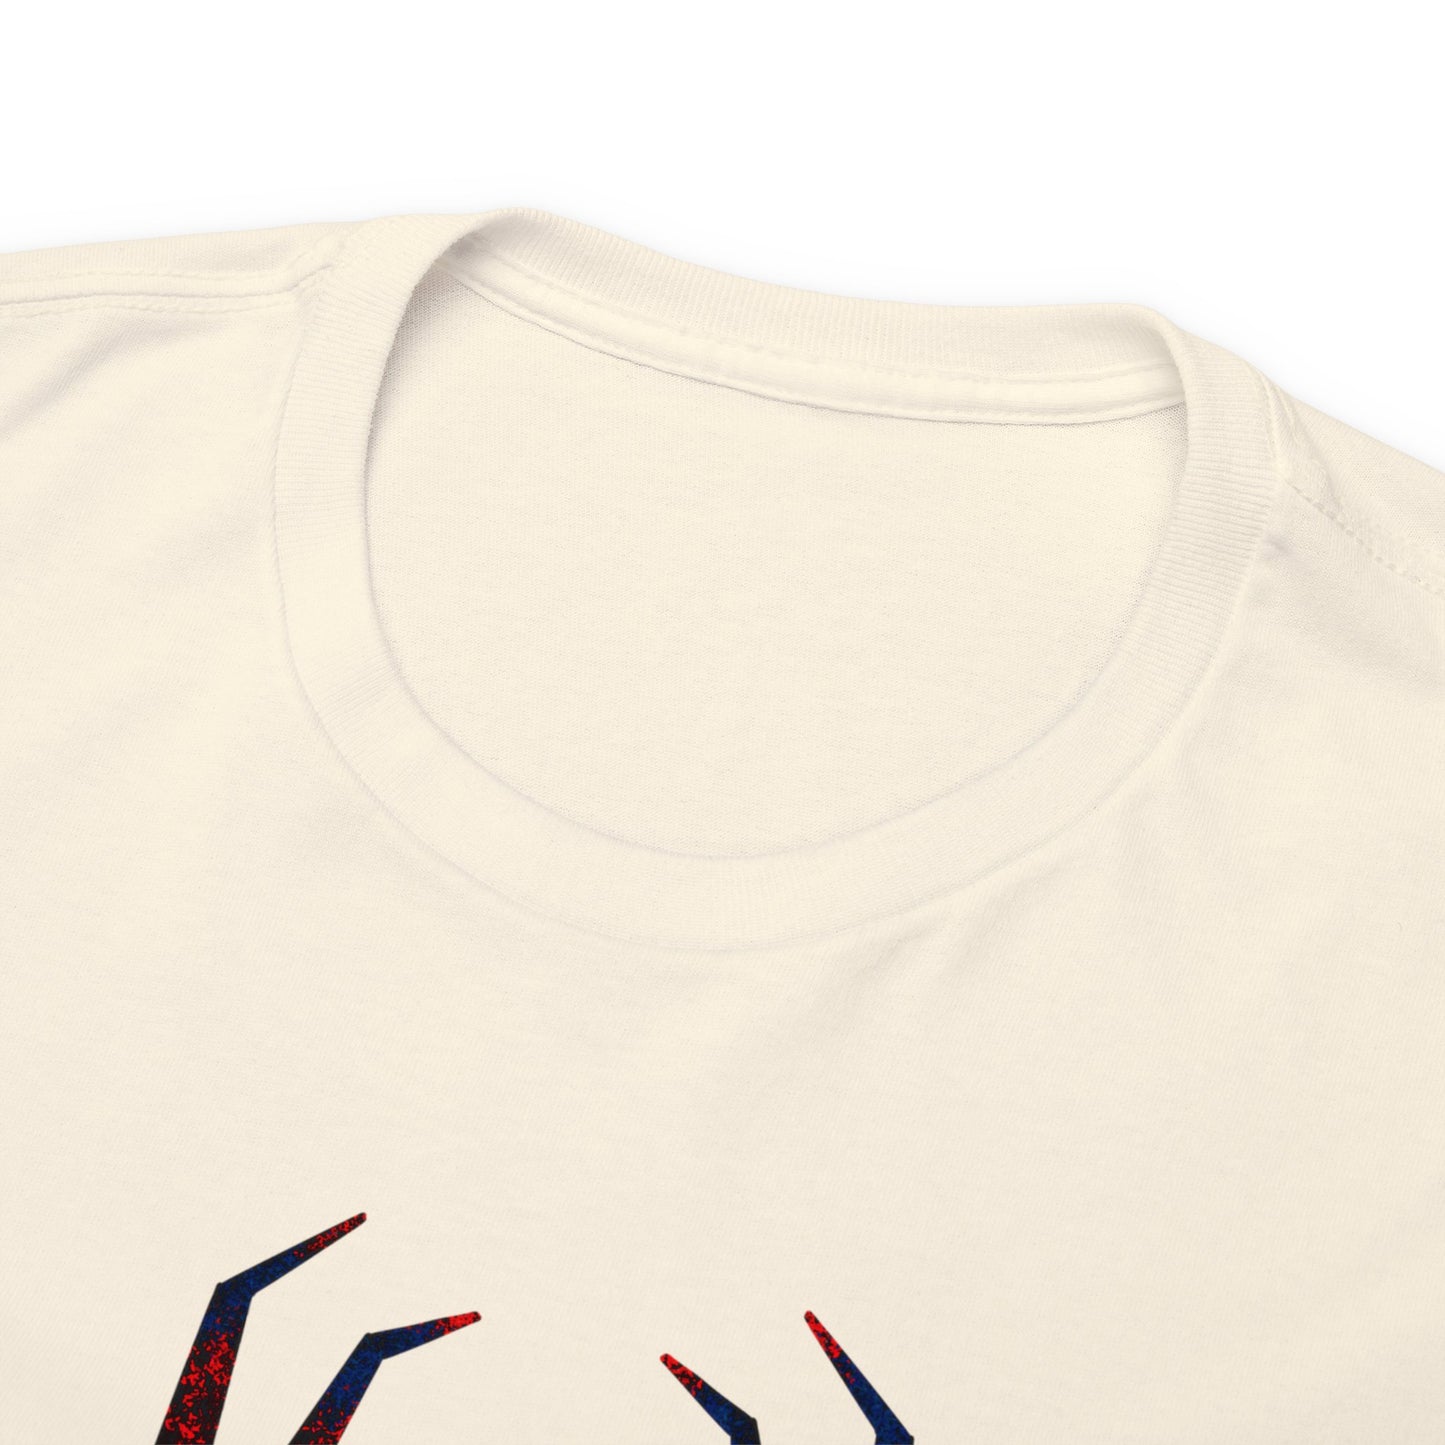 Camisa Araña/ Spider T Shirt/Camisa/Superhéroe